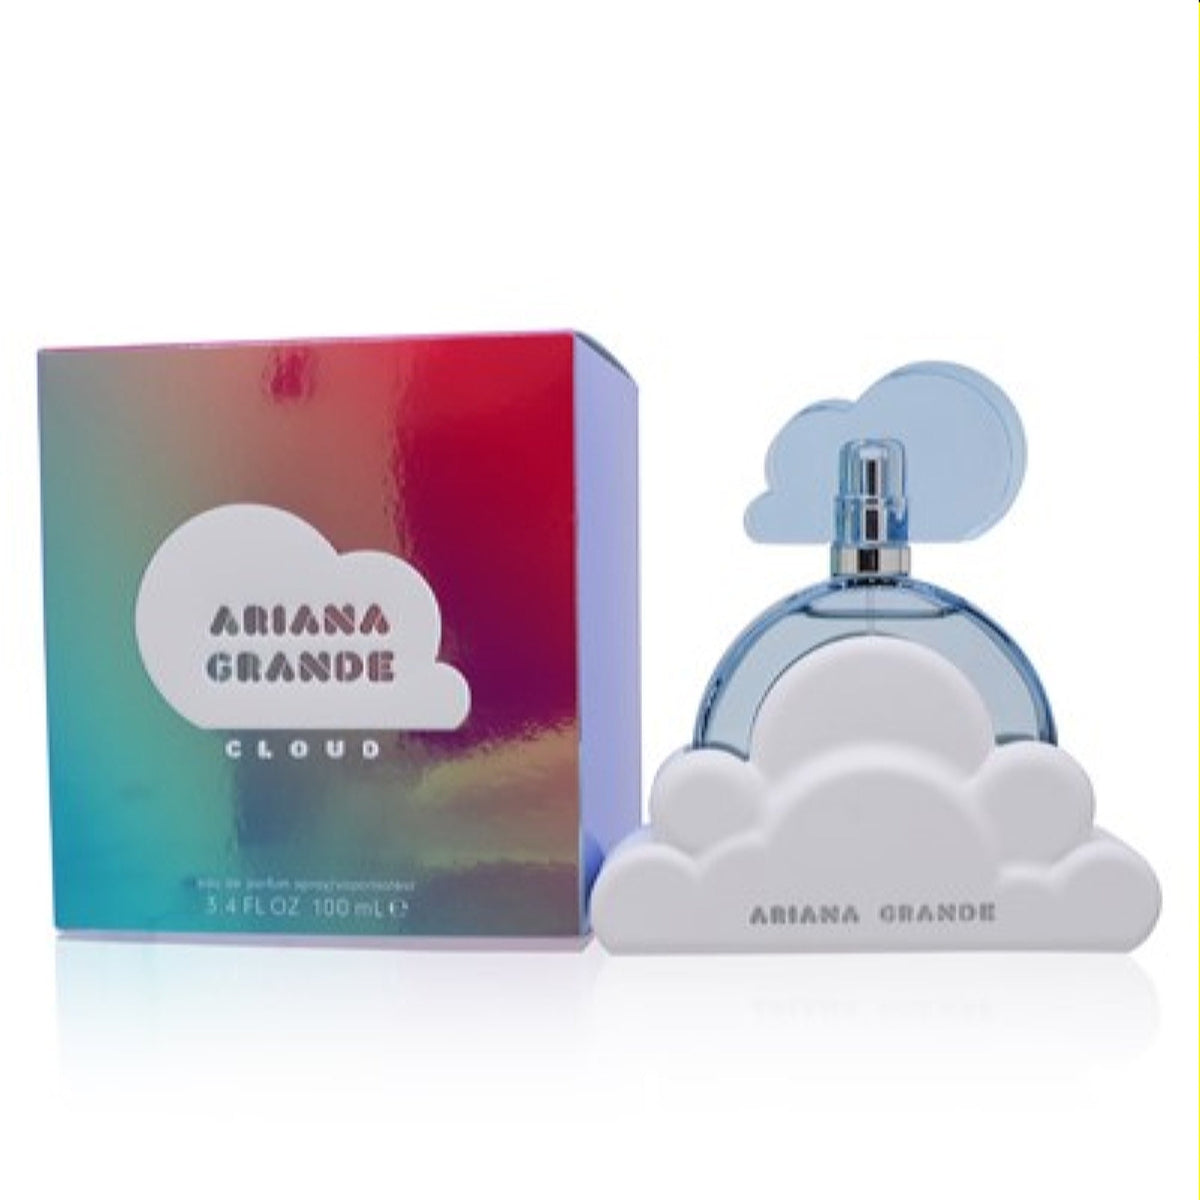 Ariana Grande Cloud Ariana Grande Edp Spray 3.4 Oz (100 Ml) For Women  ARG4LR18134